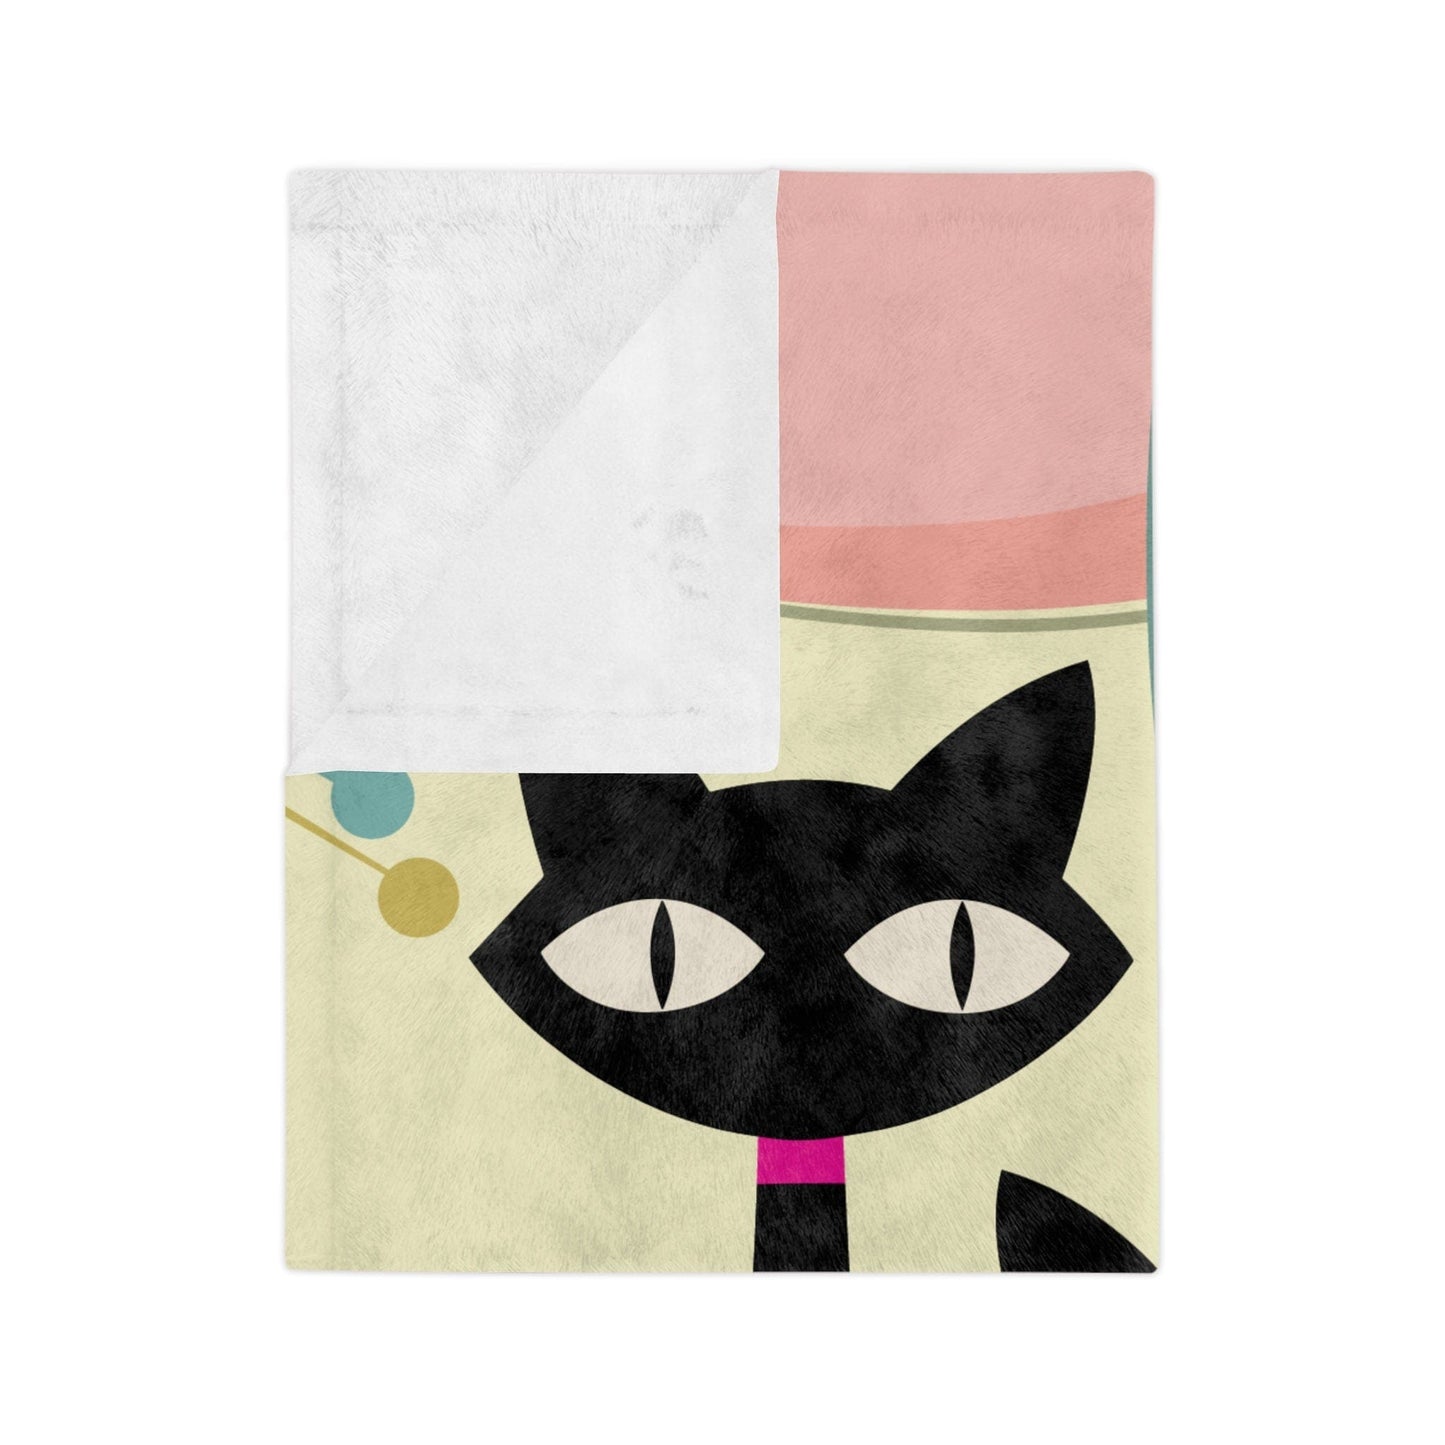 Kate McEnroe New York Atomic Cat Boomerang Starburst Minky Blanket, 1950s Retro Mod Teal, Pink, Cream Yellow Geometric Blanket, MCM Soft Plush Throw - 13429123 Blankets